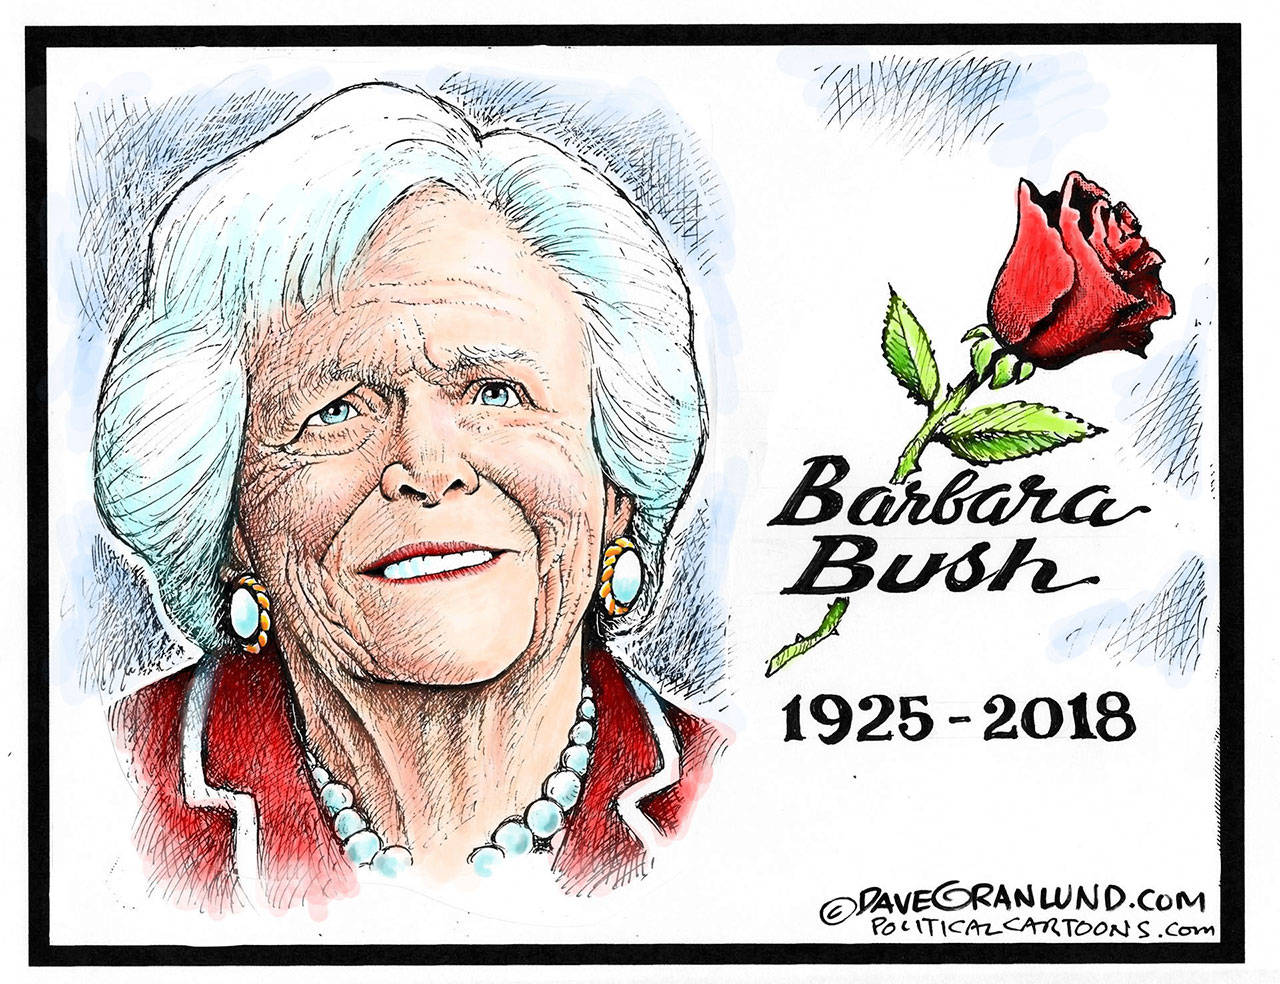 In Memory: First Lady Barbara Bush